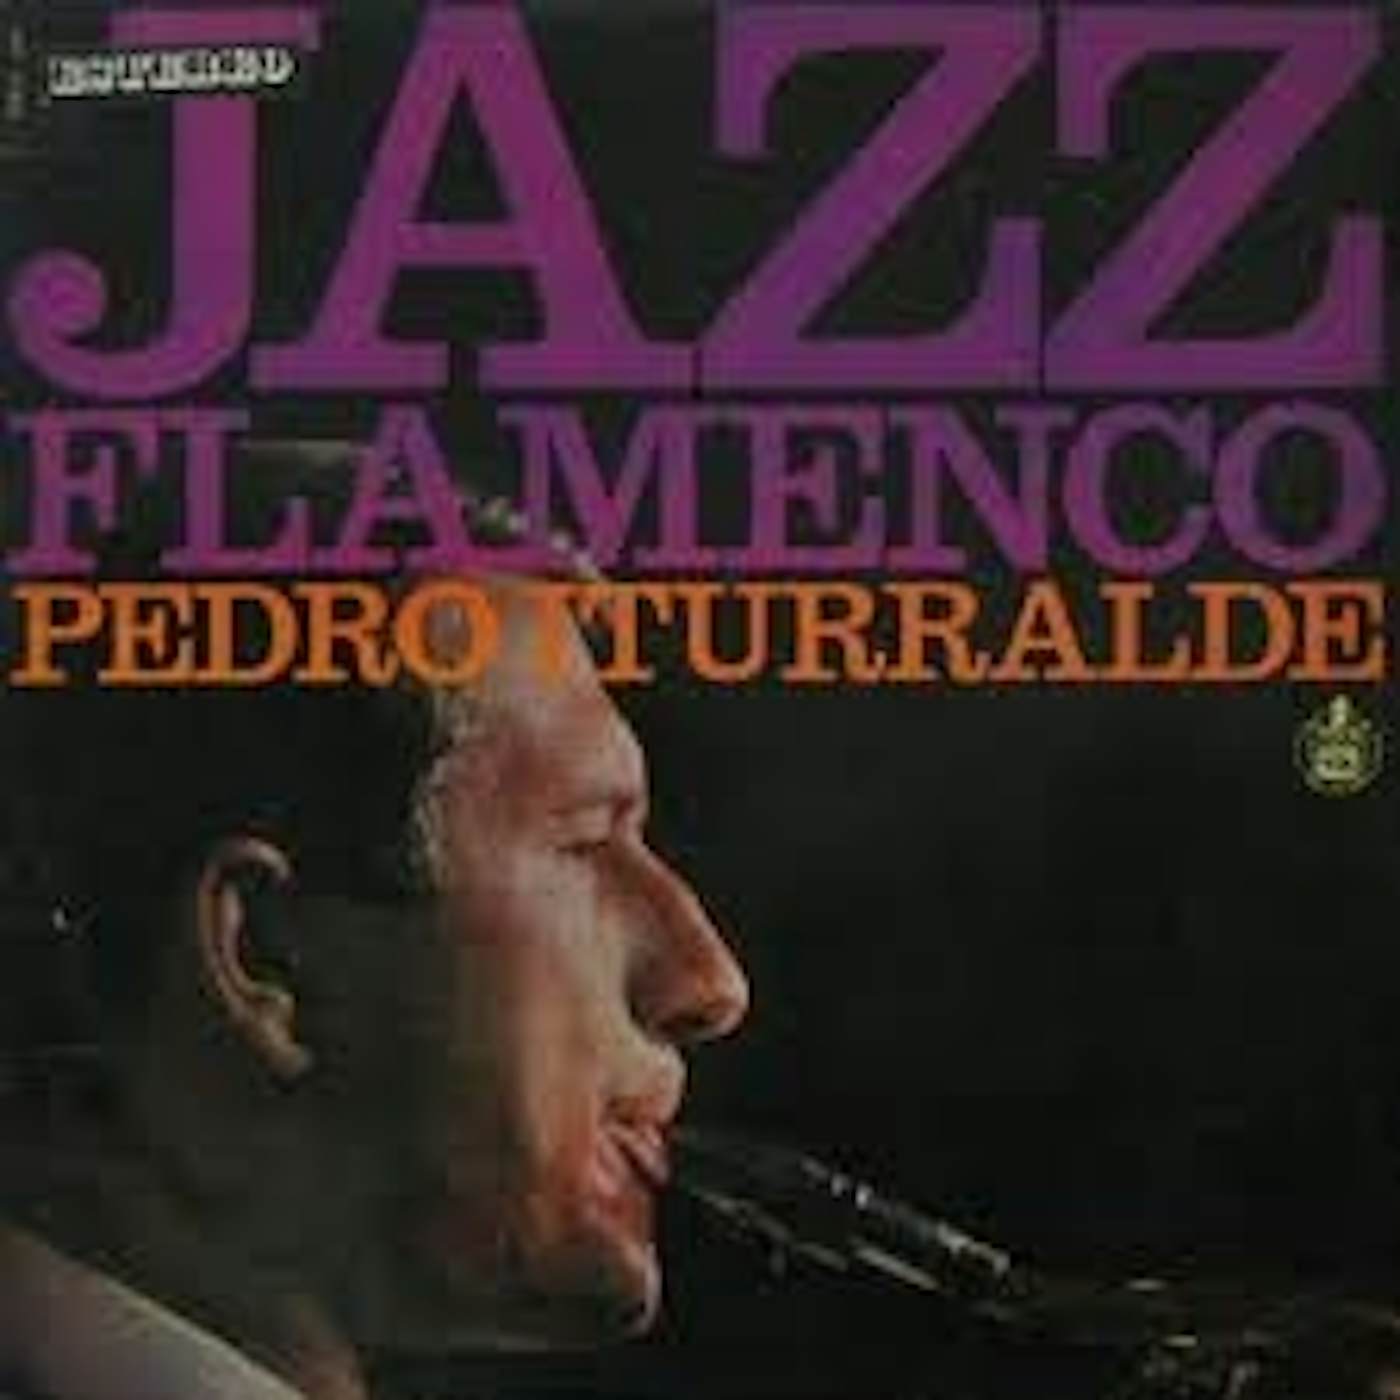 Pedro Iturralde JAZZ FLAMENCO Vinyl Record